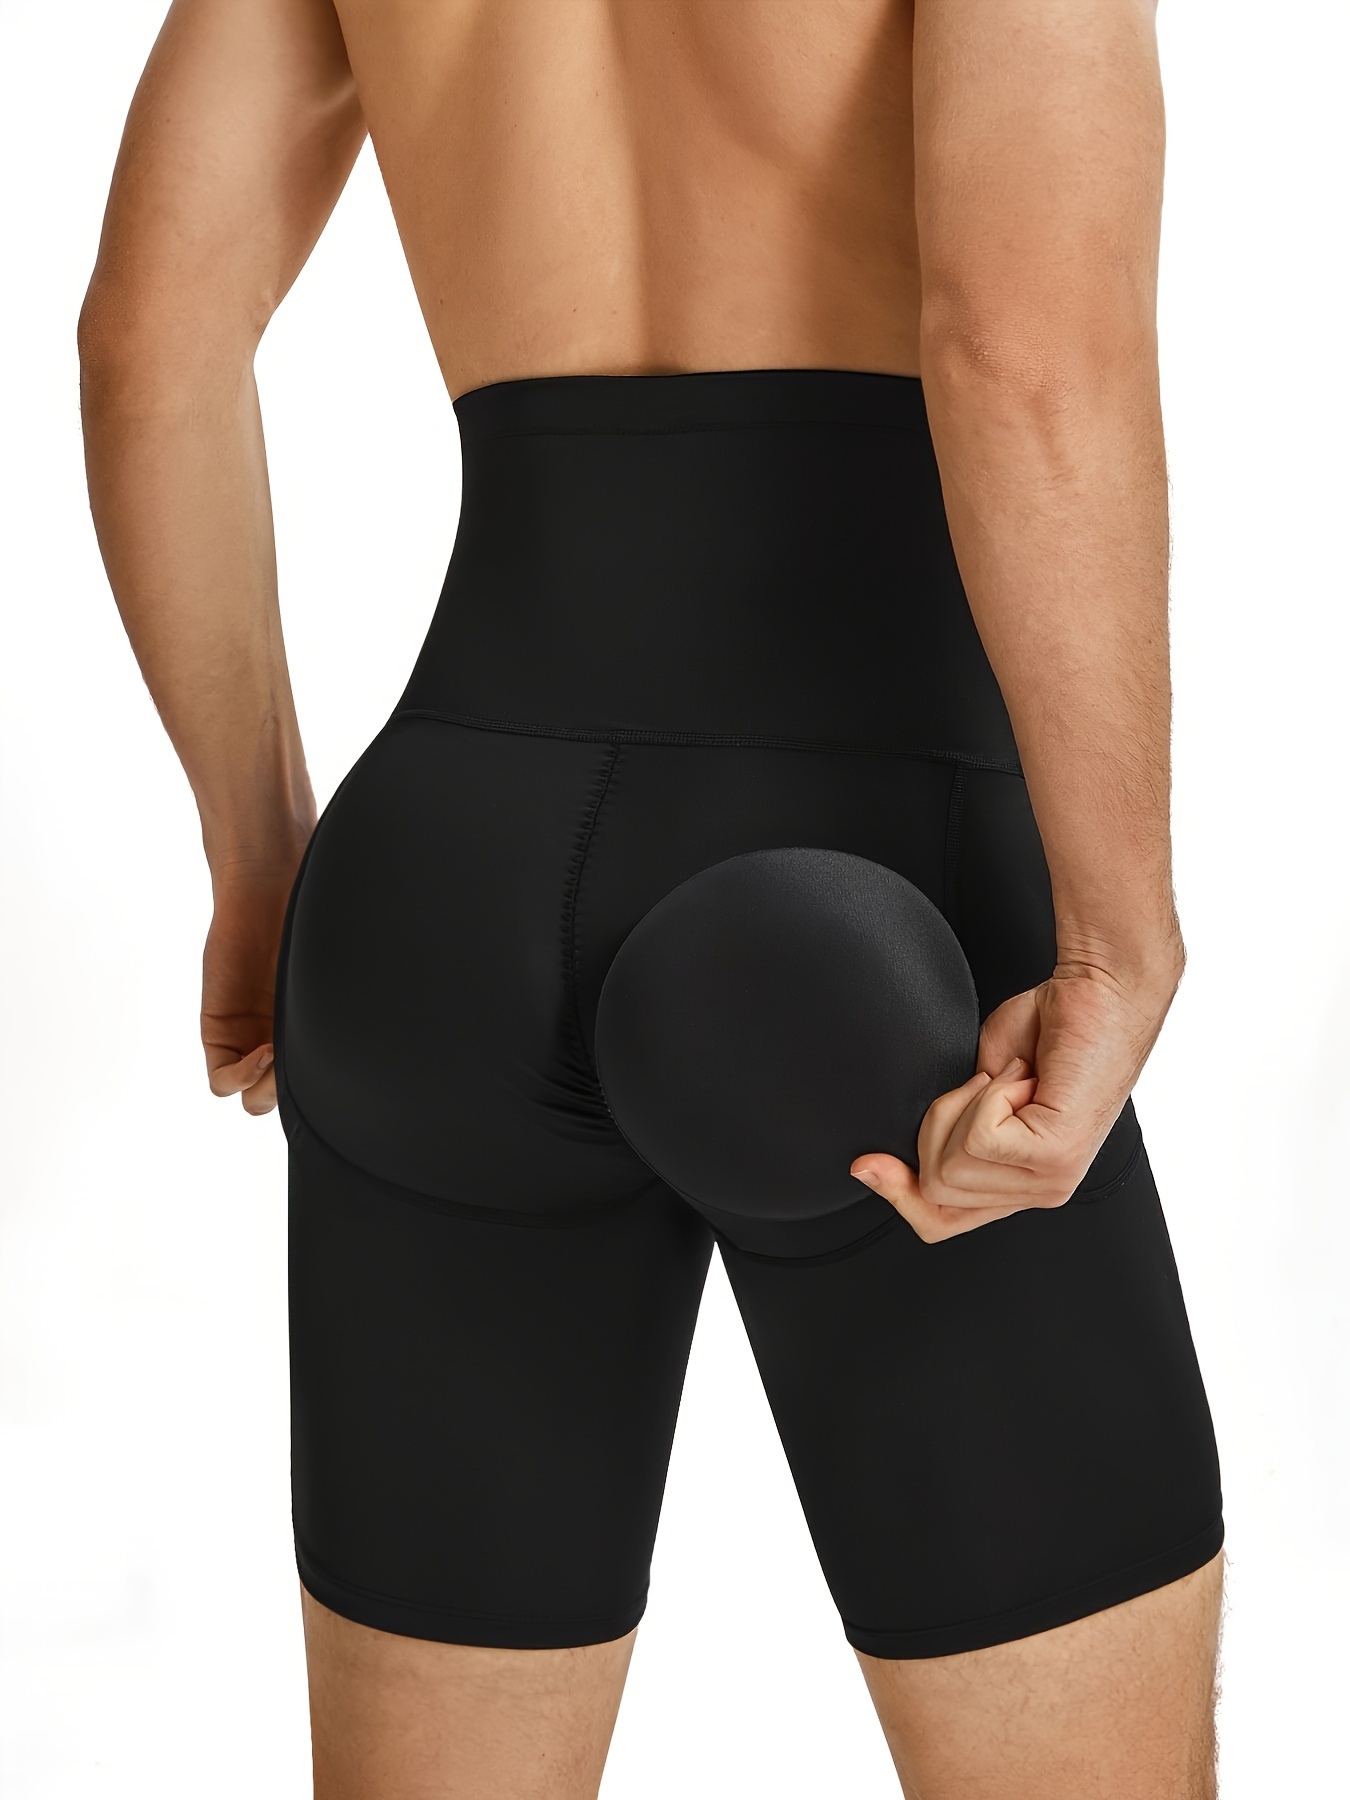  Mens Underwear Skims Shapewear Back Support Posture